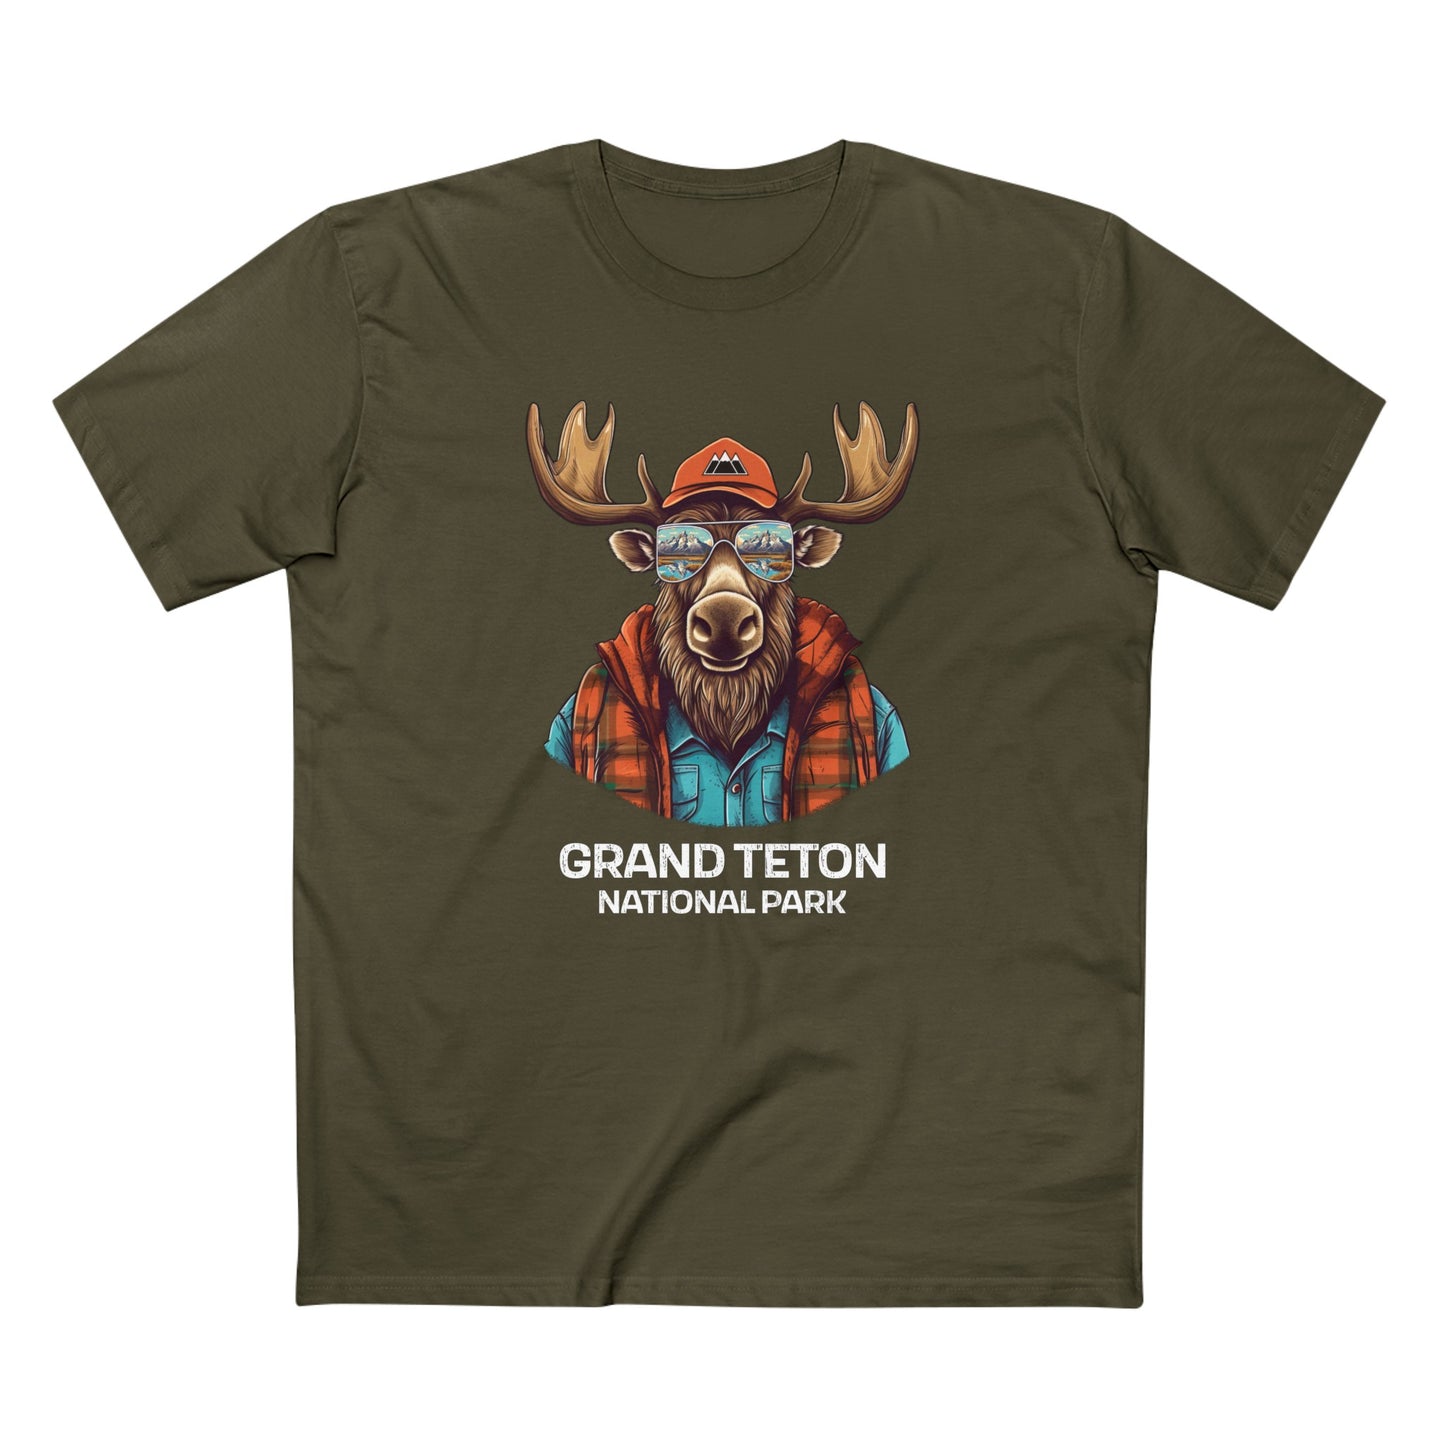 Grand Teton National Park T-Shirt - Cool Moose